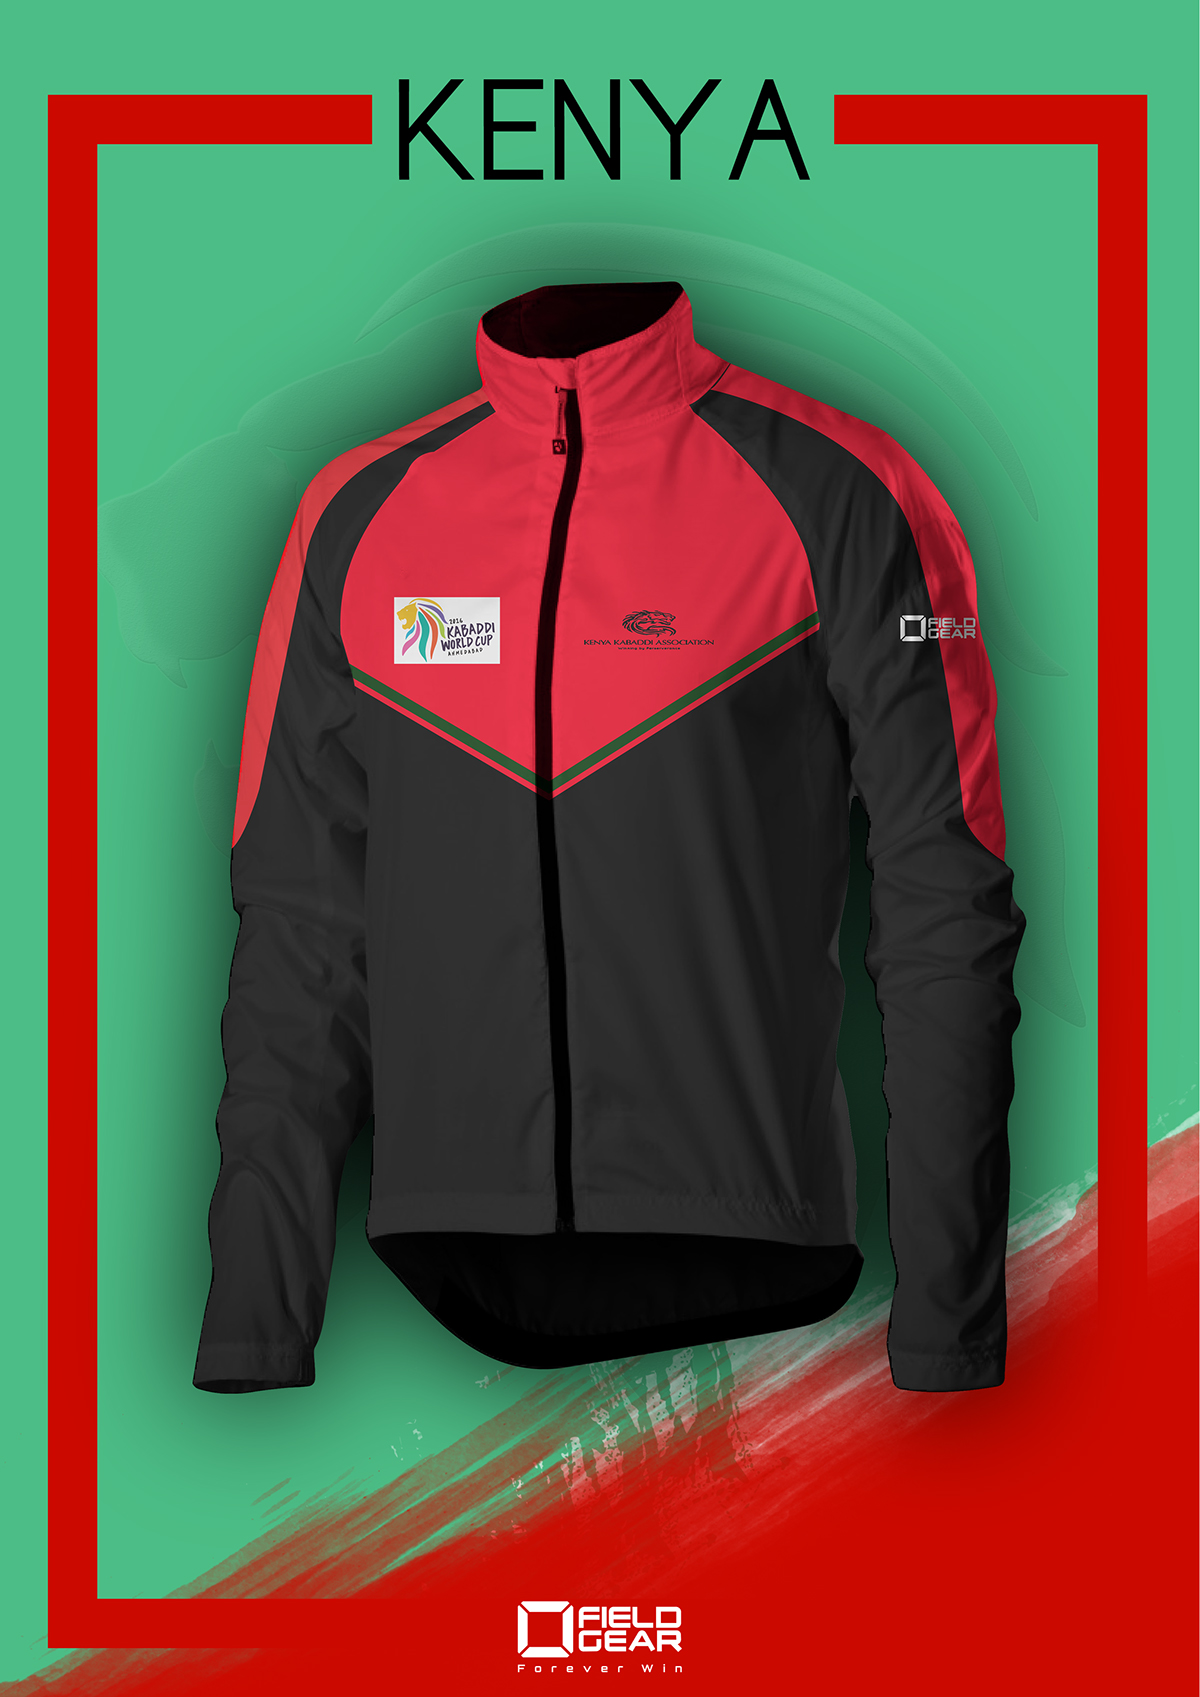 usa activewear jersey uniform branding  kenya soccer Sportswear